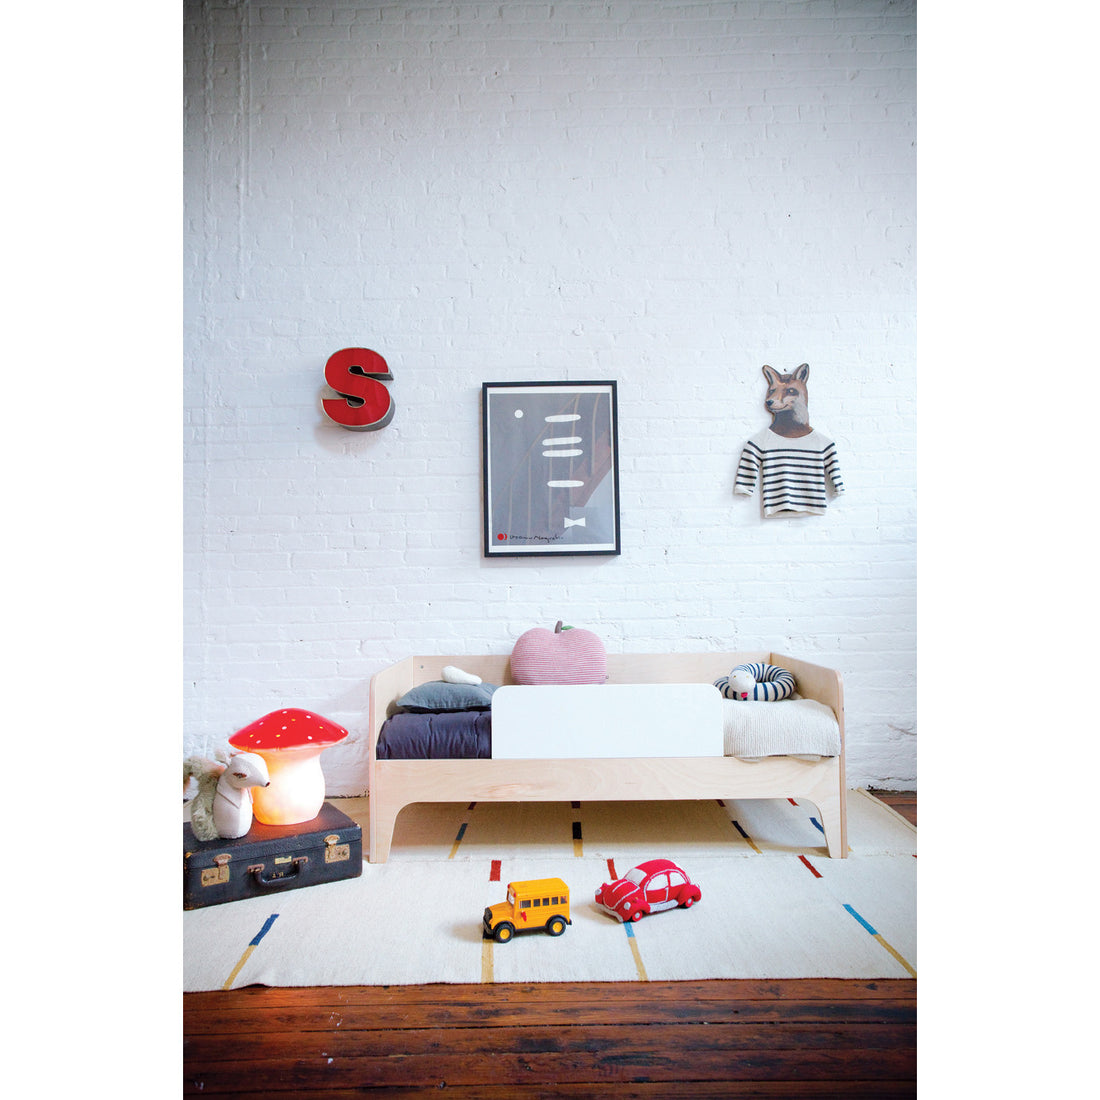 oeuf-perch-toddler-bed-furniture-oeuf-1ptb01-eu-03